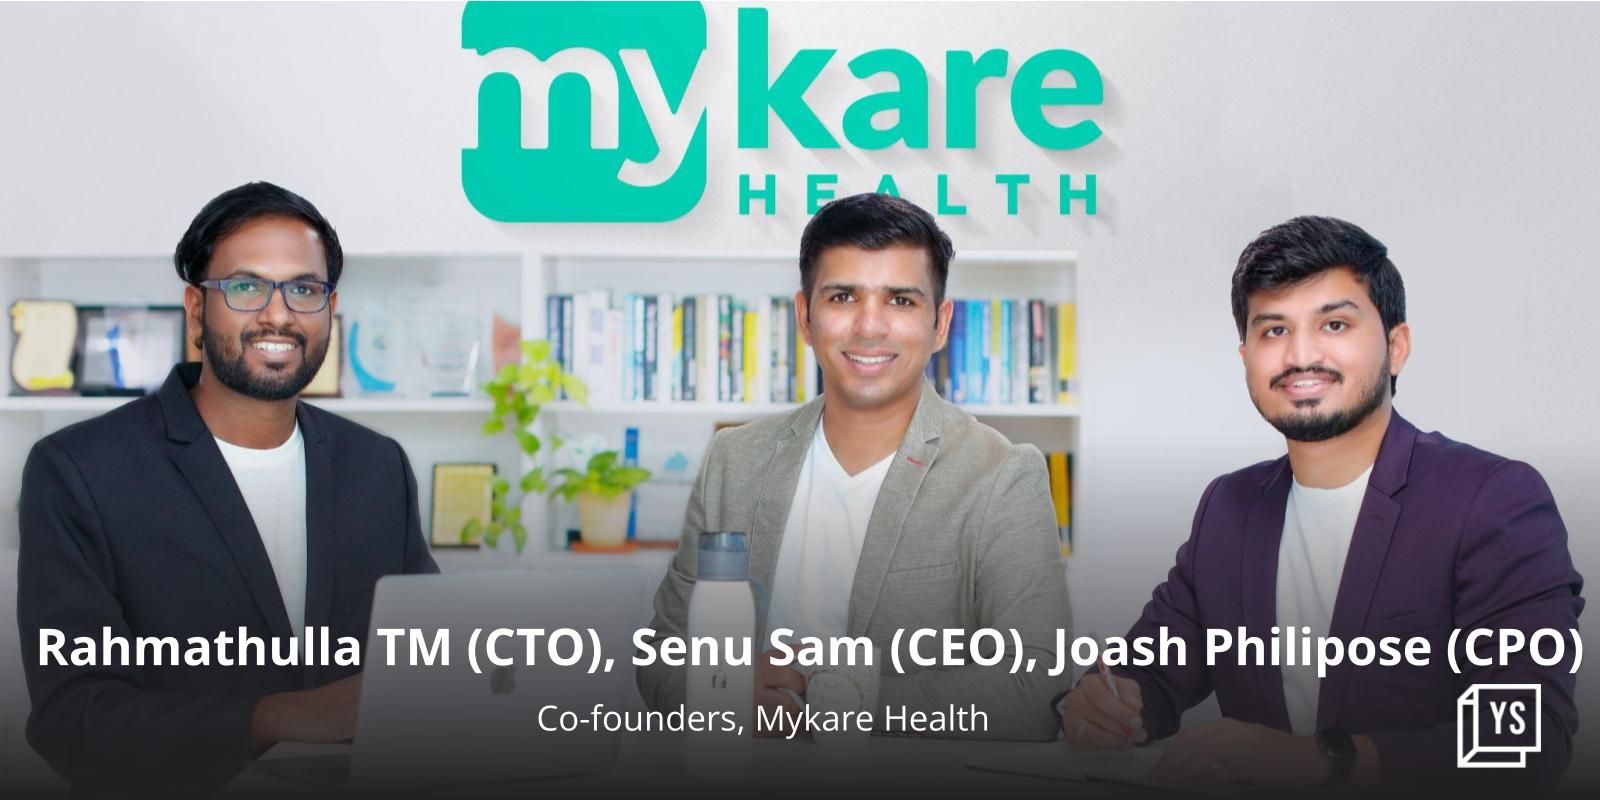 Digital health startup Mykare Health raises $2.01M in seed round